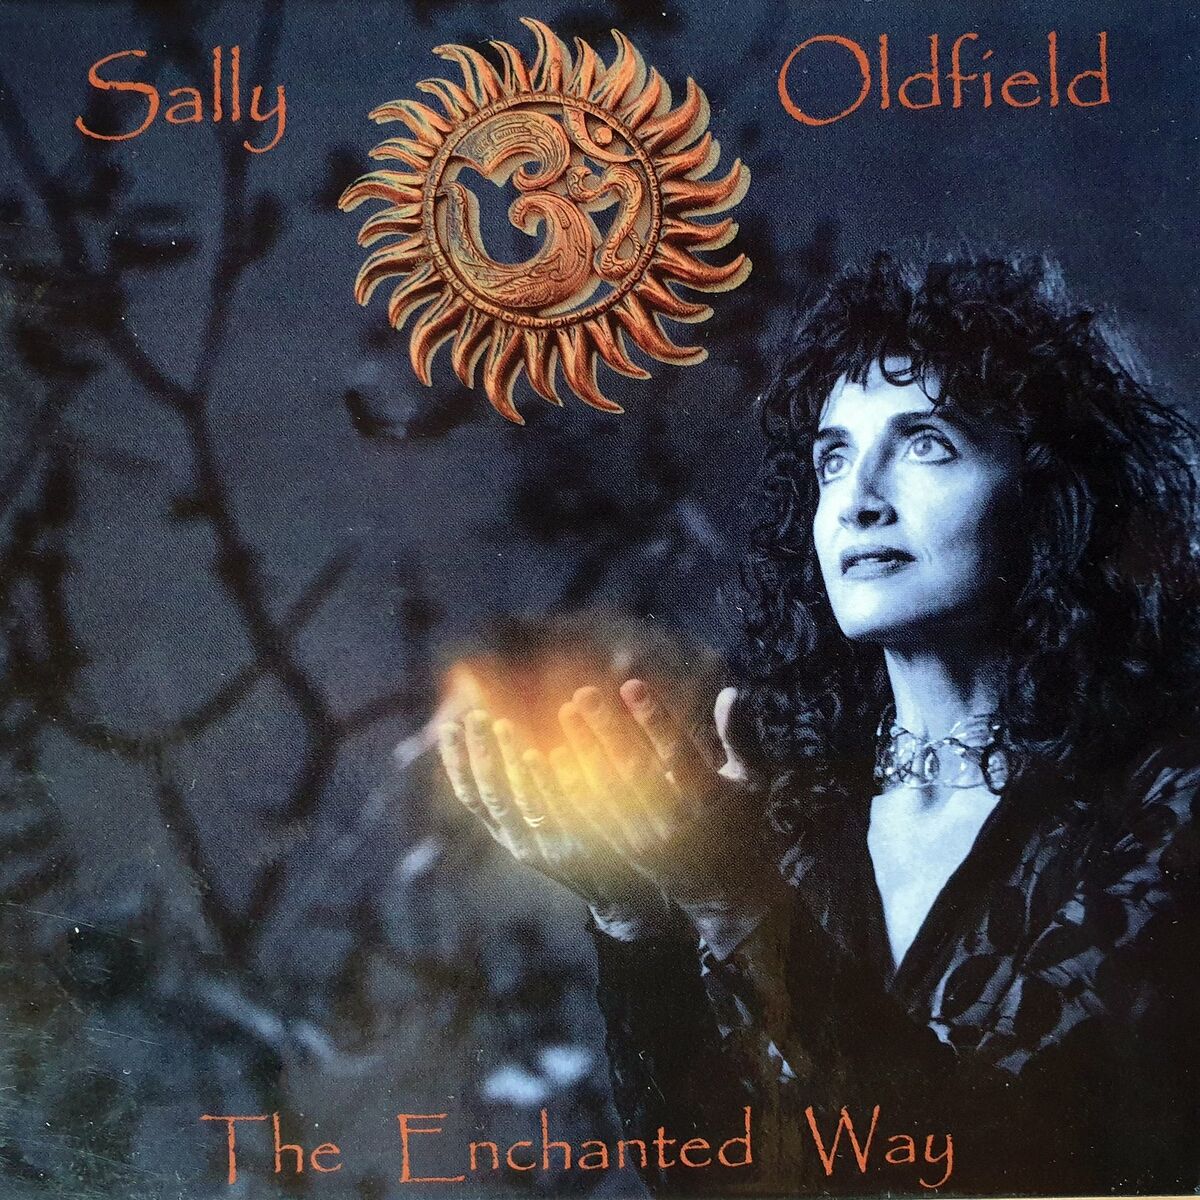 Sally Oldfield: albums, songs, playlists | Listen on Deezer